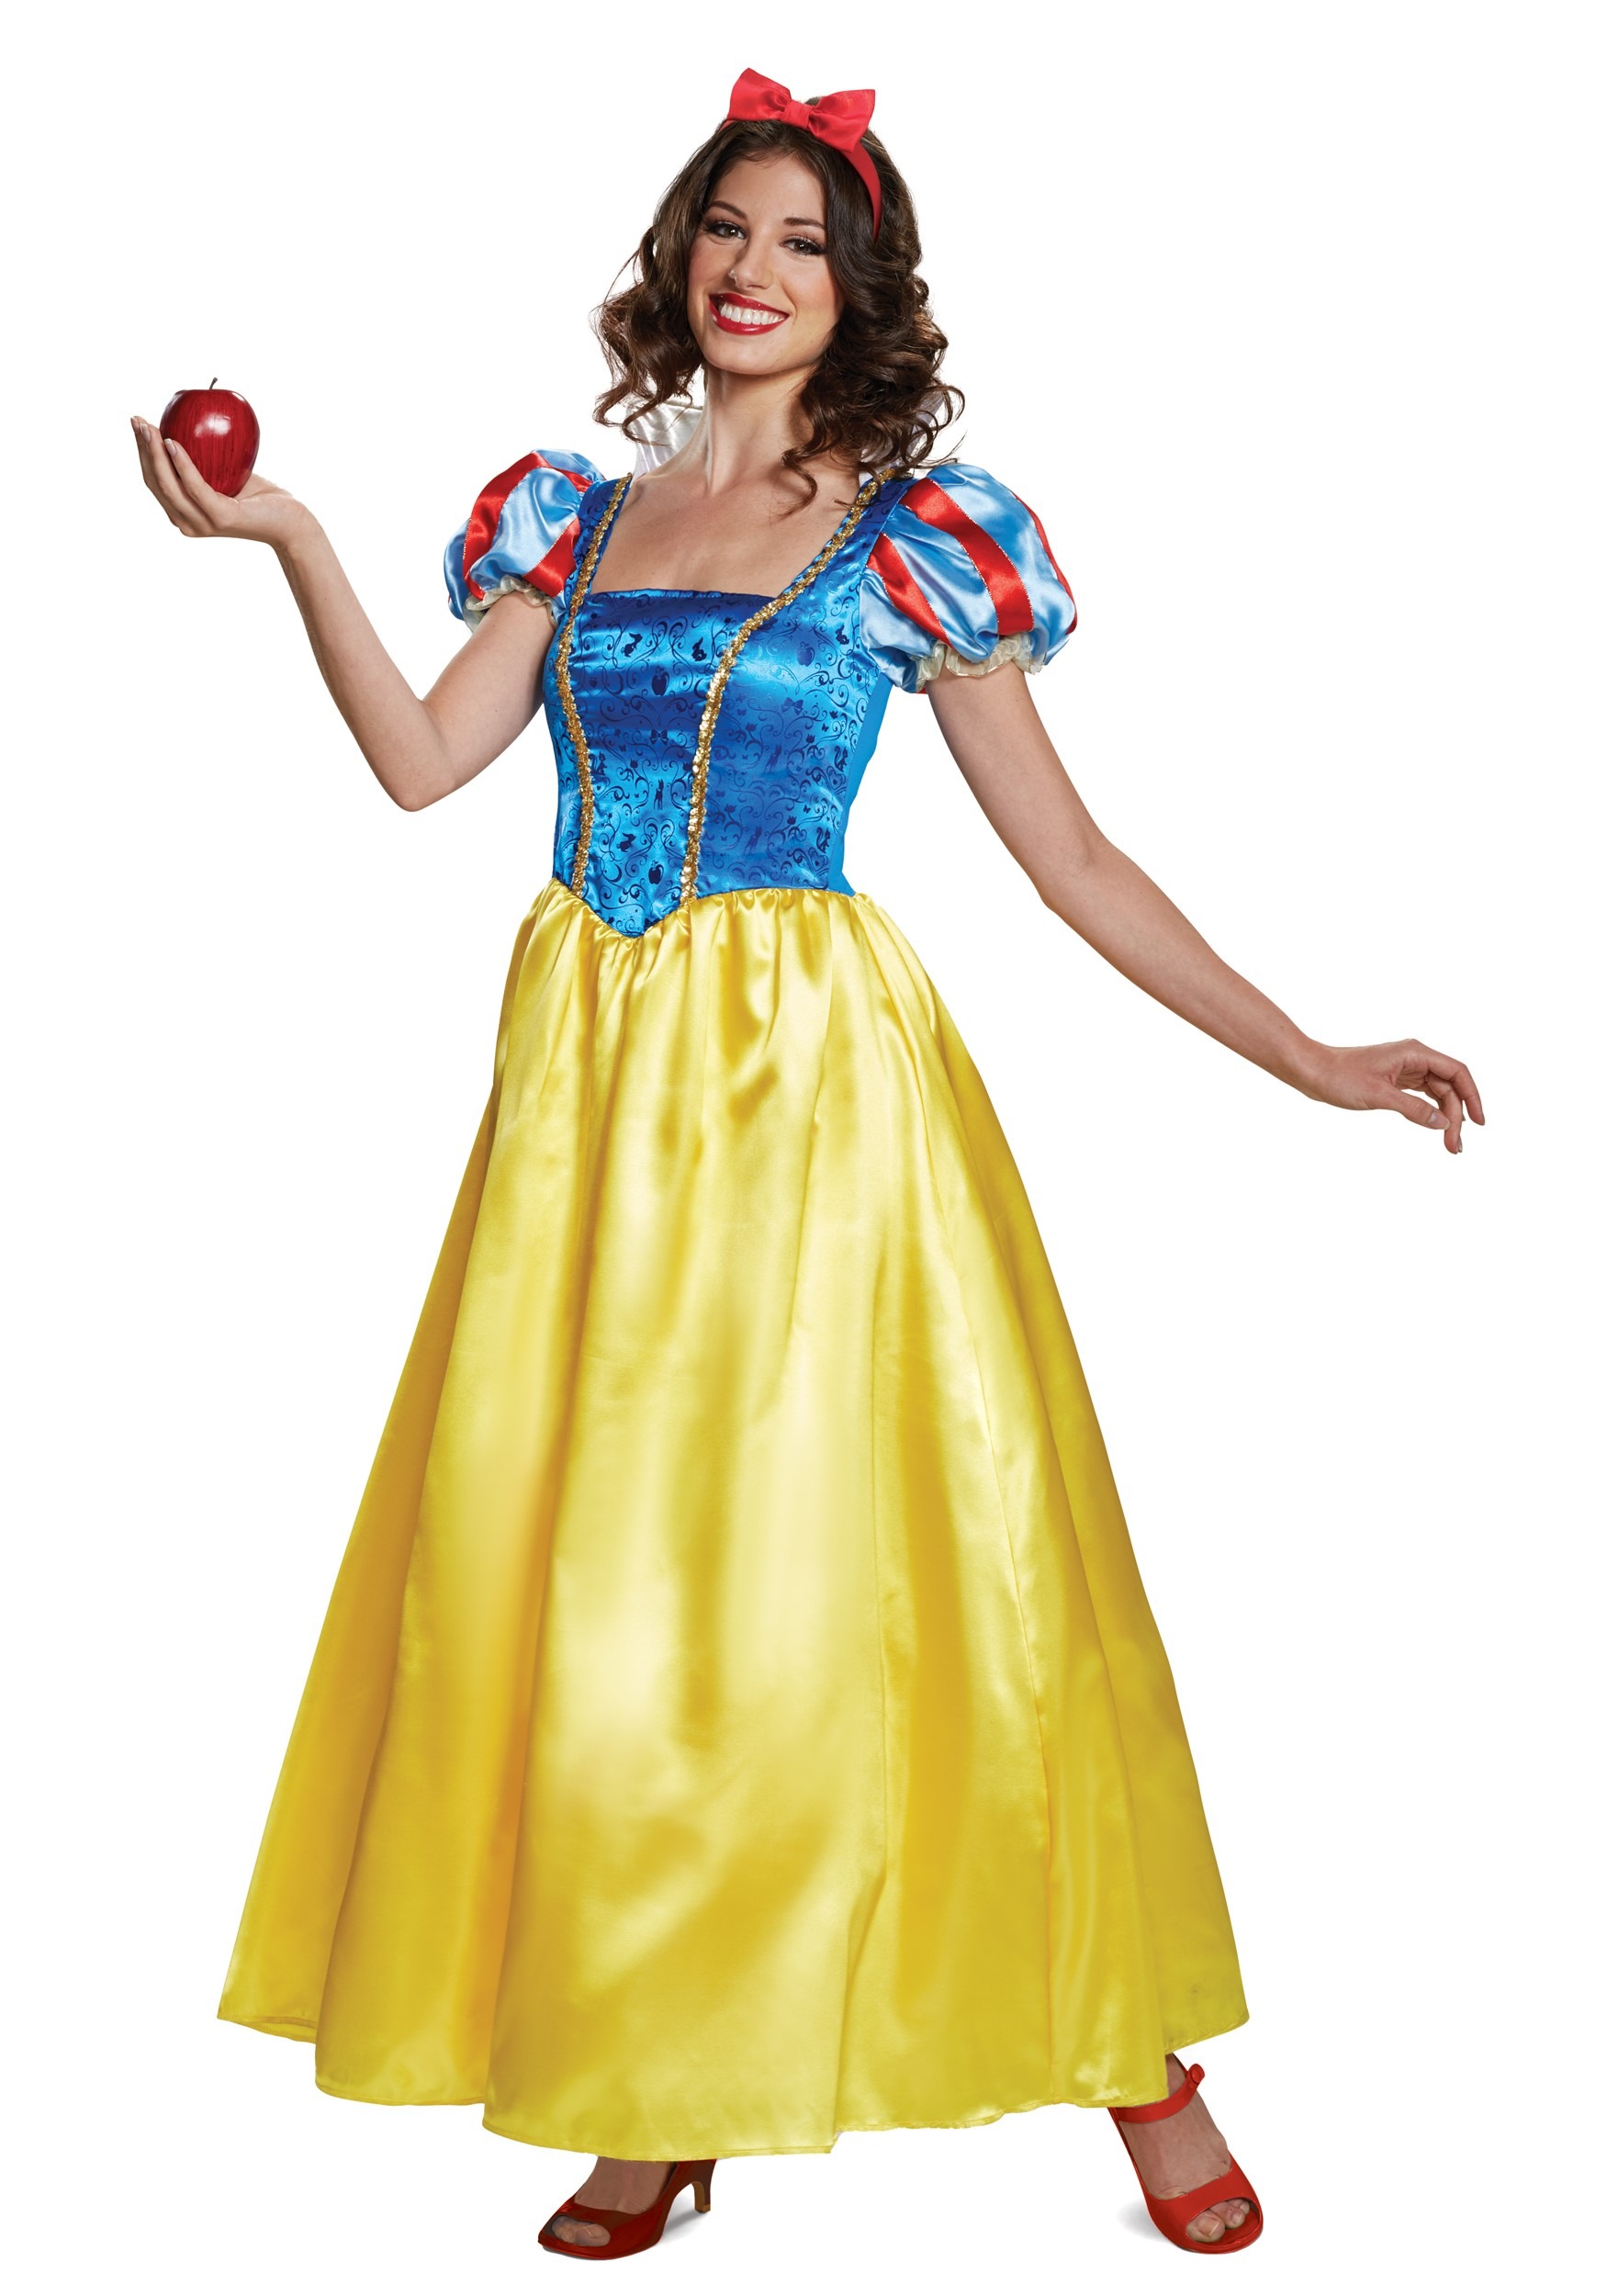 Adult Deluxe Snow White Costume 1580